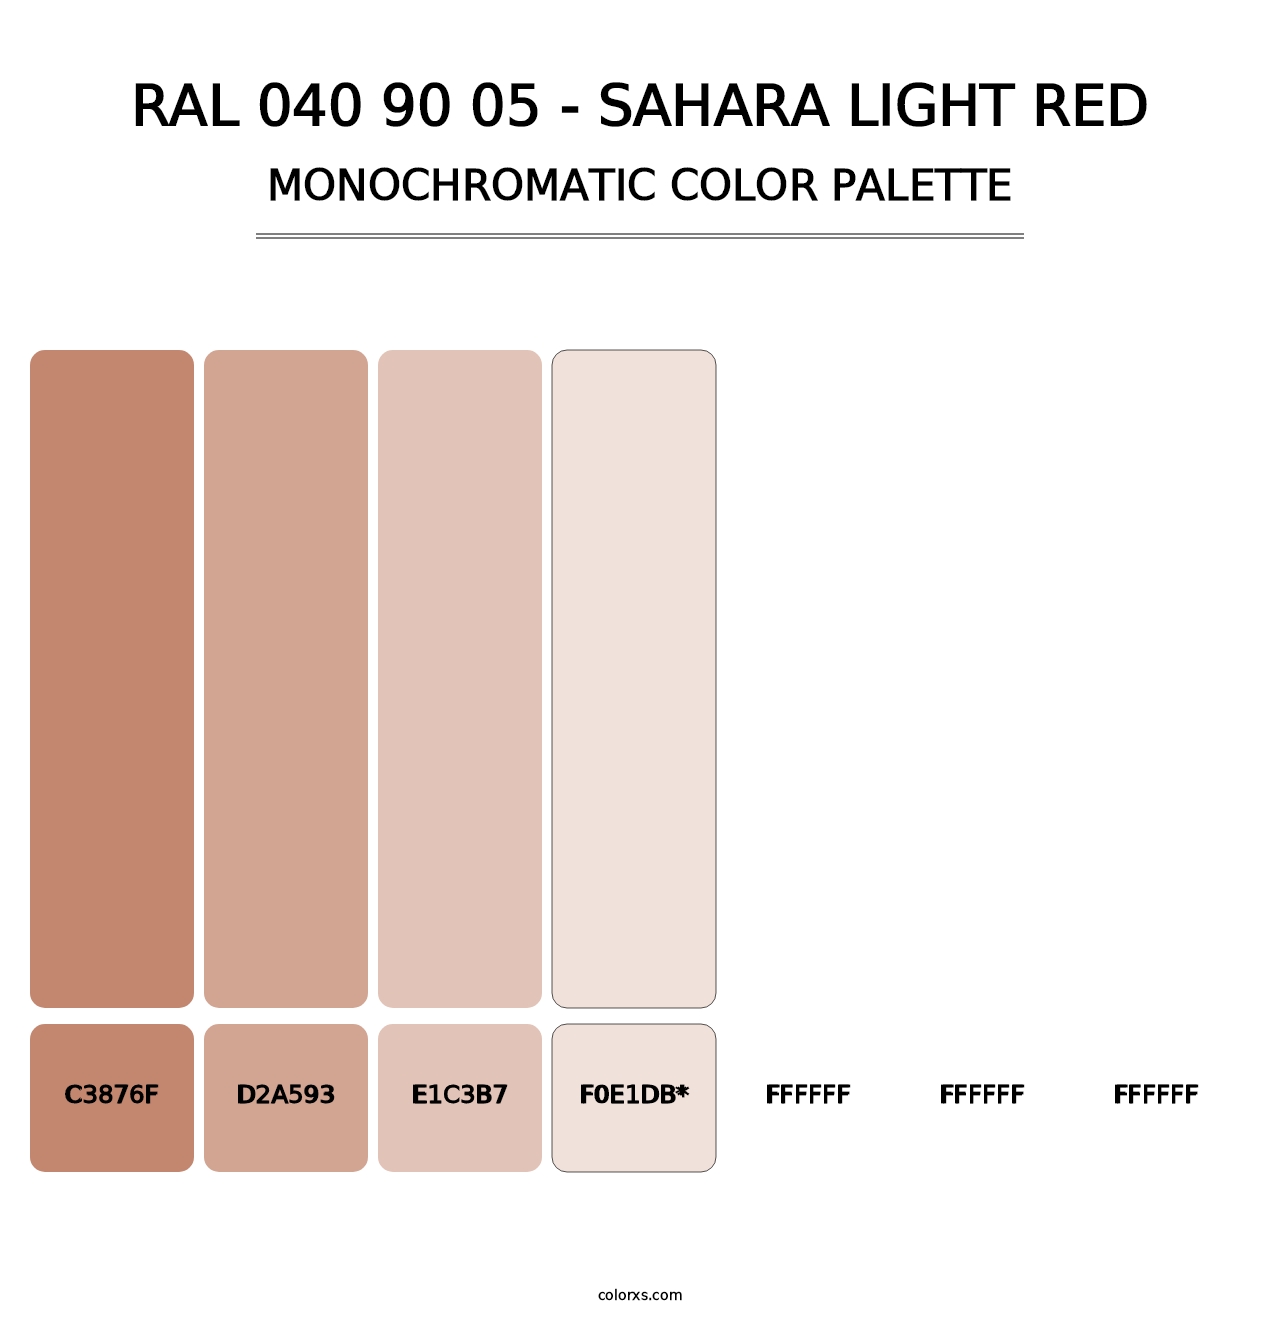 RAL 040 90 05 - Sahara Light Red - Monochromatic Color Palette